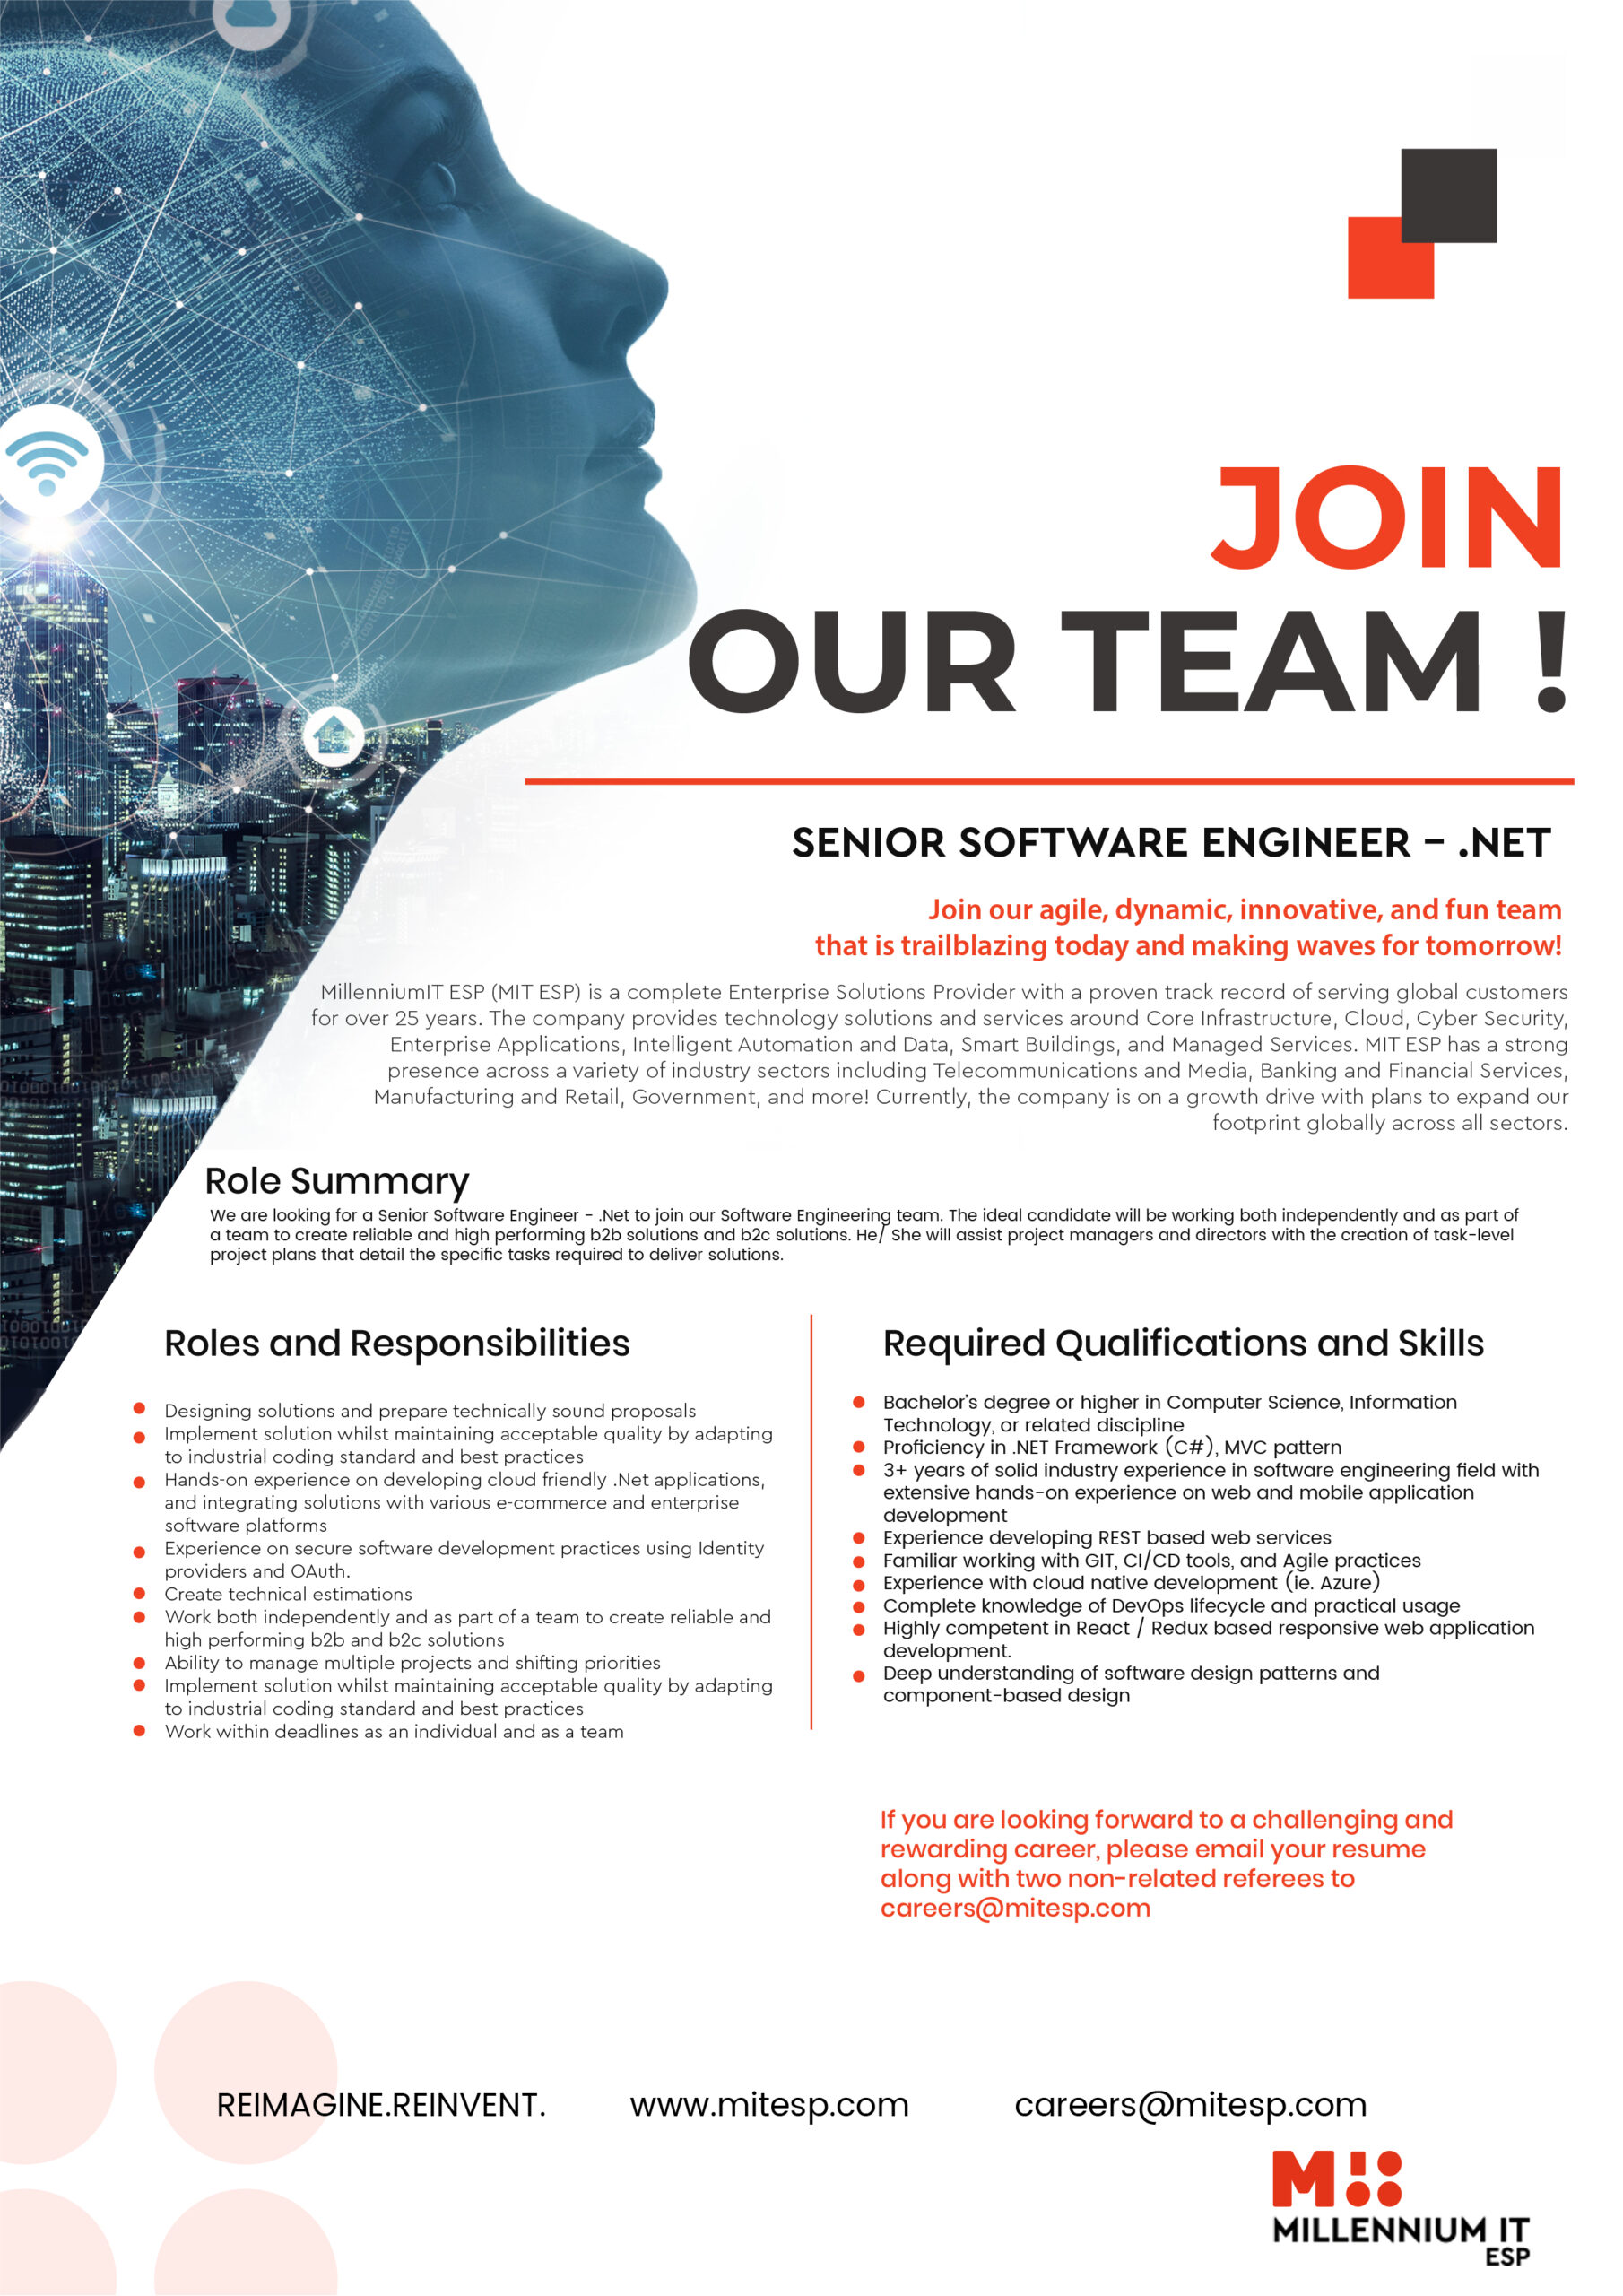 Senior Software Engineer - .Net - JD Image